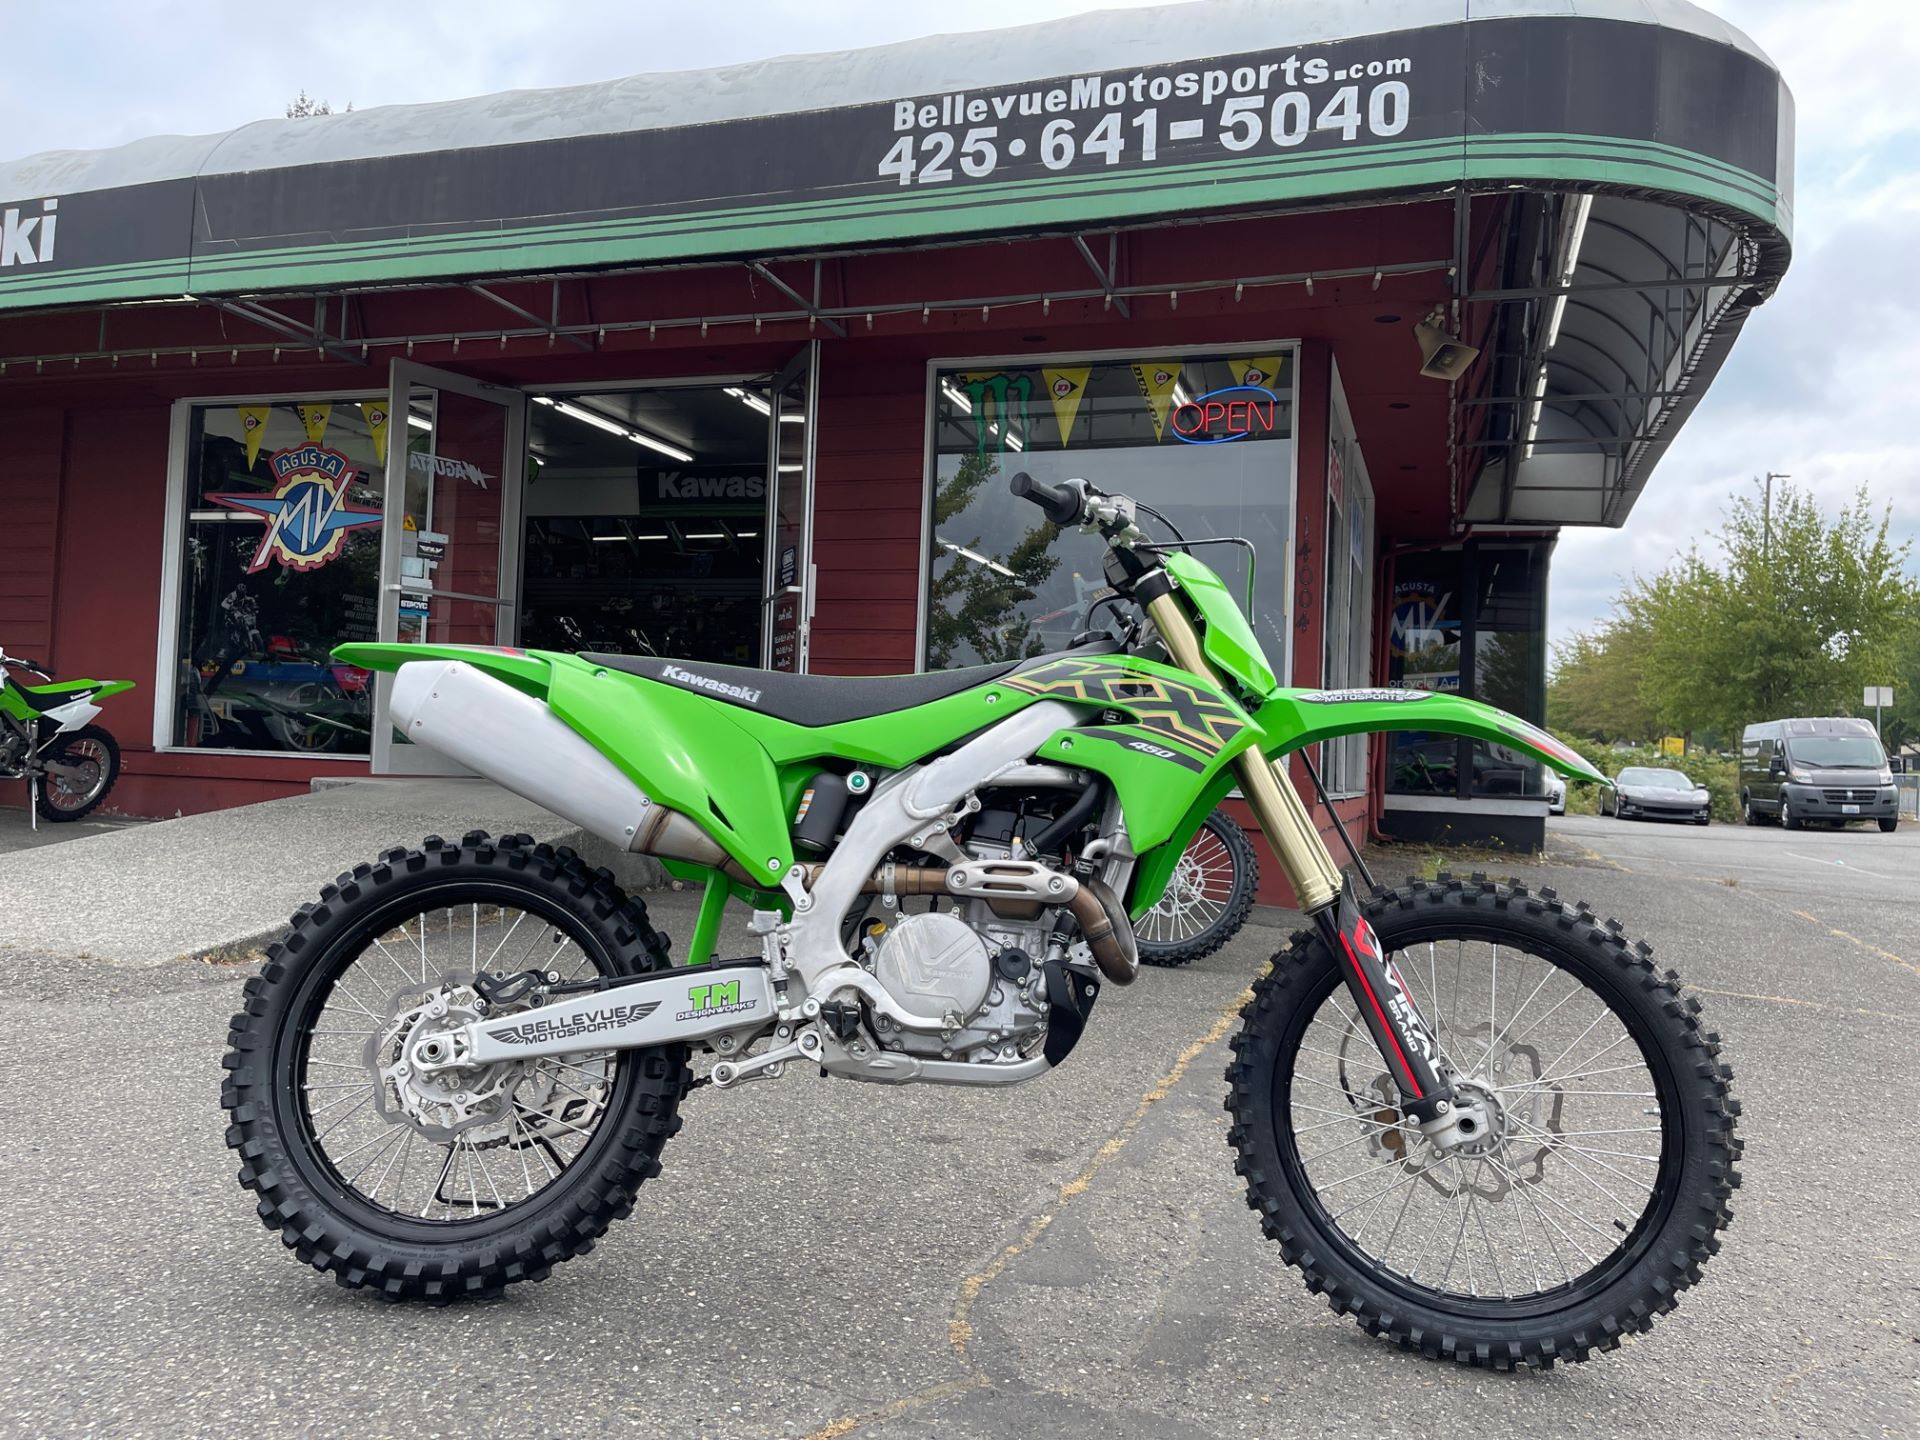 2021 Kawasaki KX 450 Motorcycles in Bellevue, WA | Stock Number: 12707